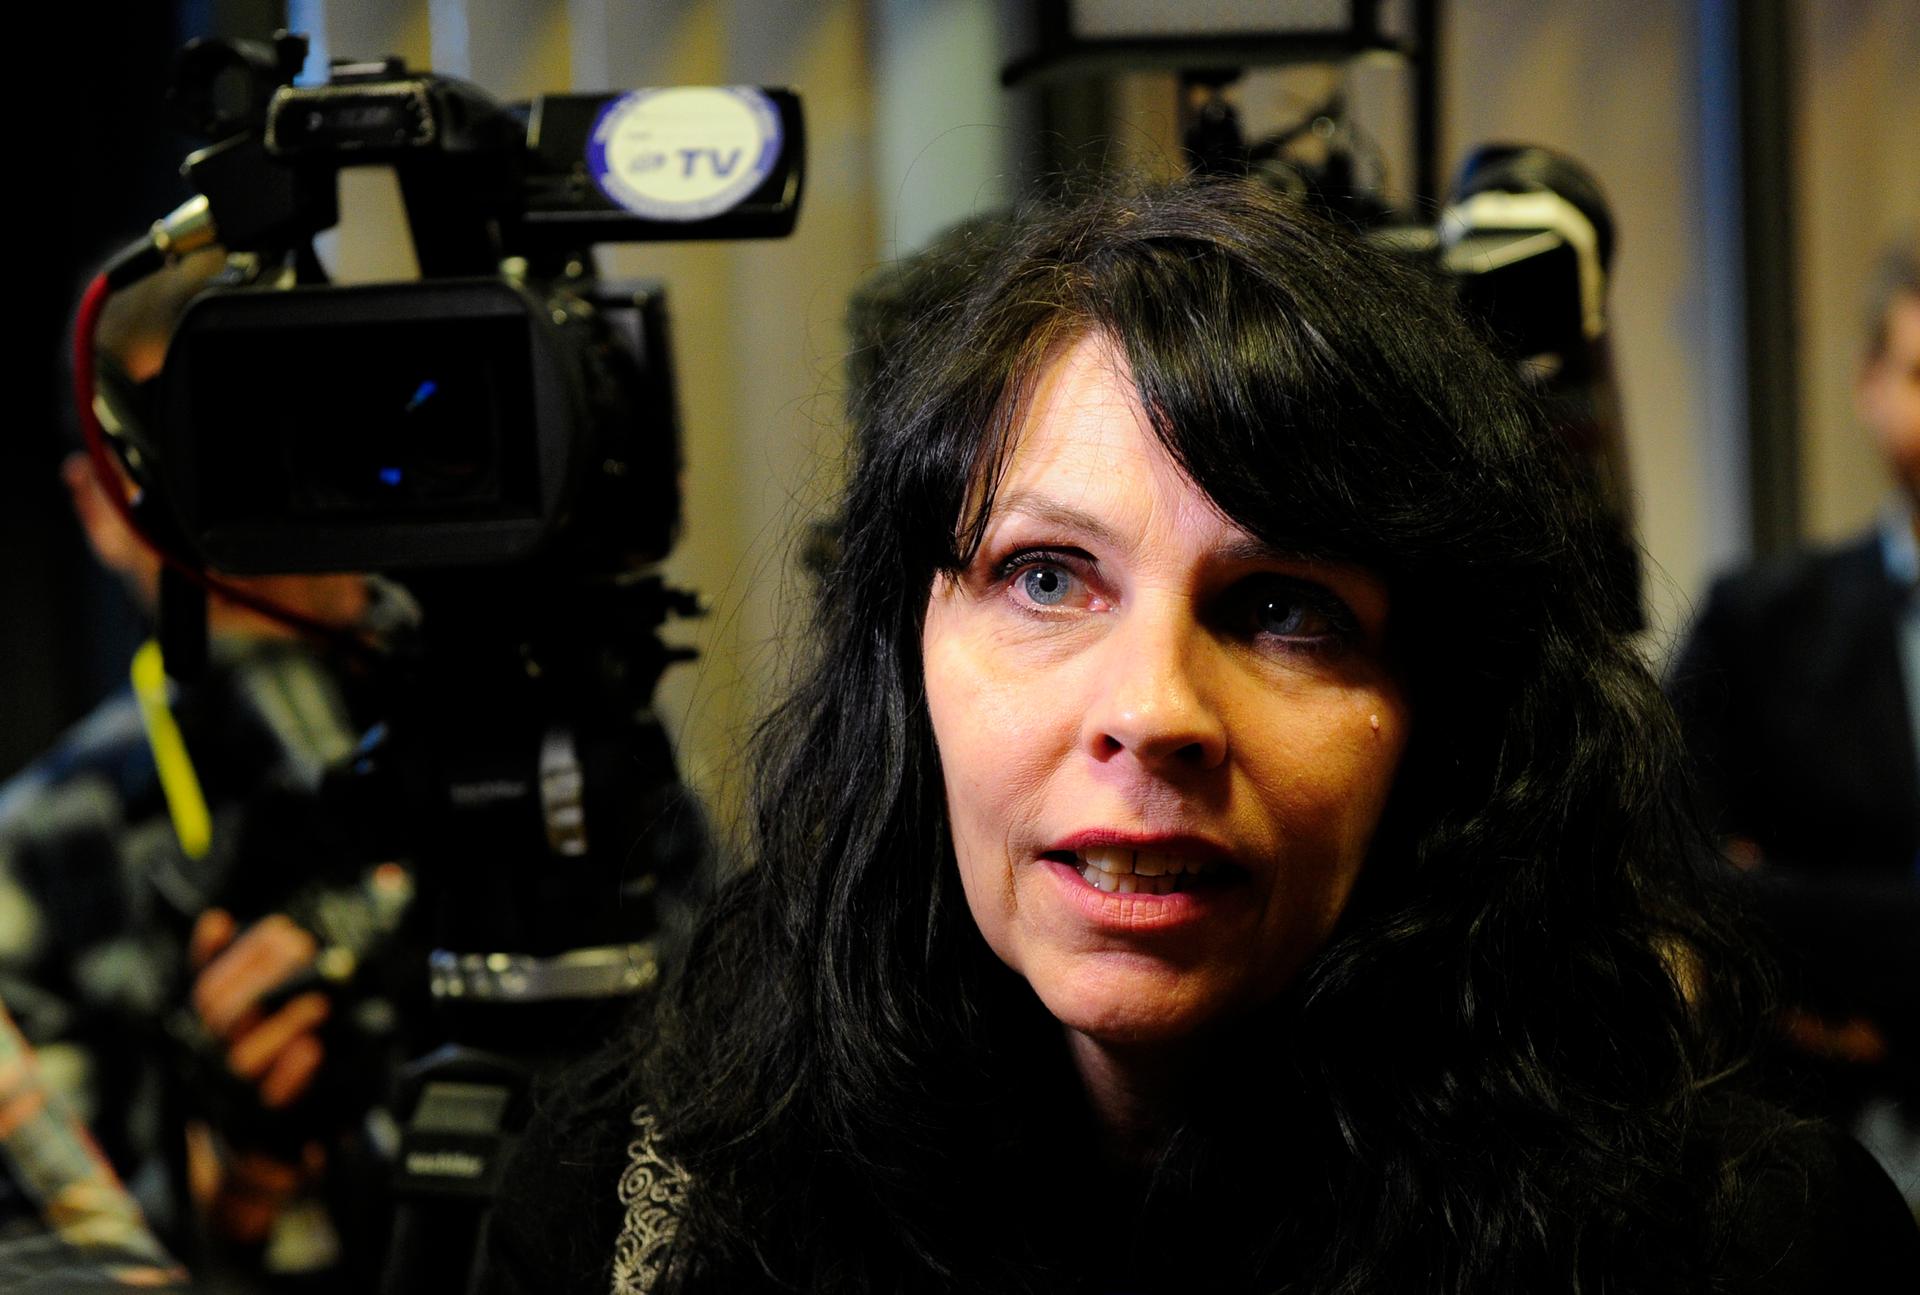 Birgitta Jonsdottir of the Pirate Party speaks in Reykjavik, Iceland on April 6, 2016. 